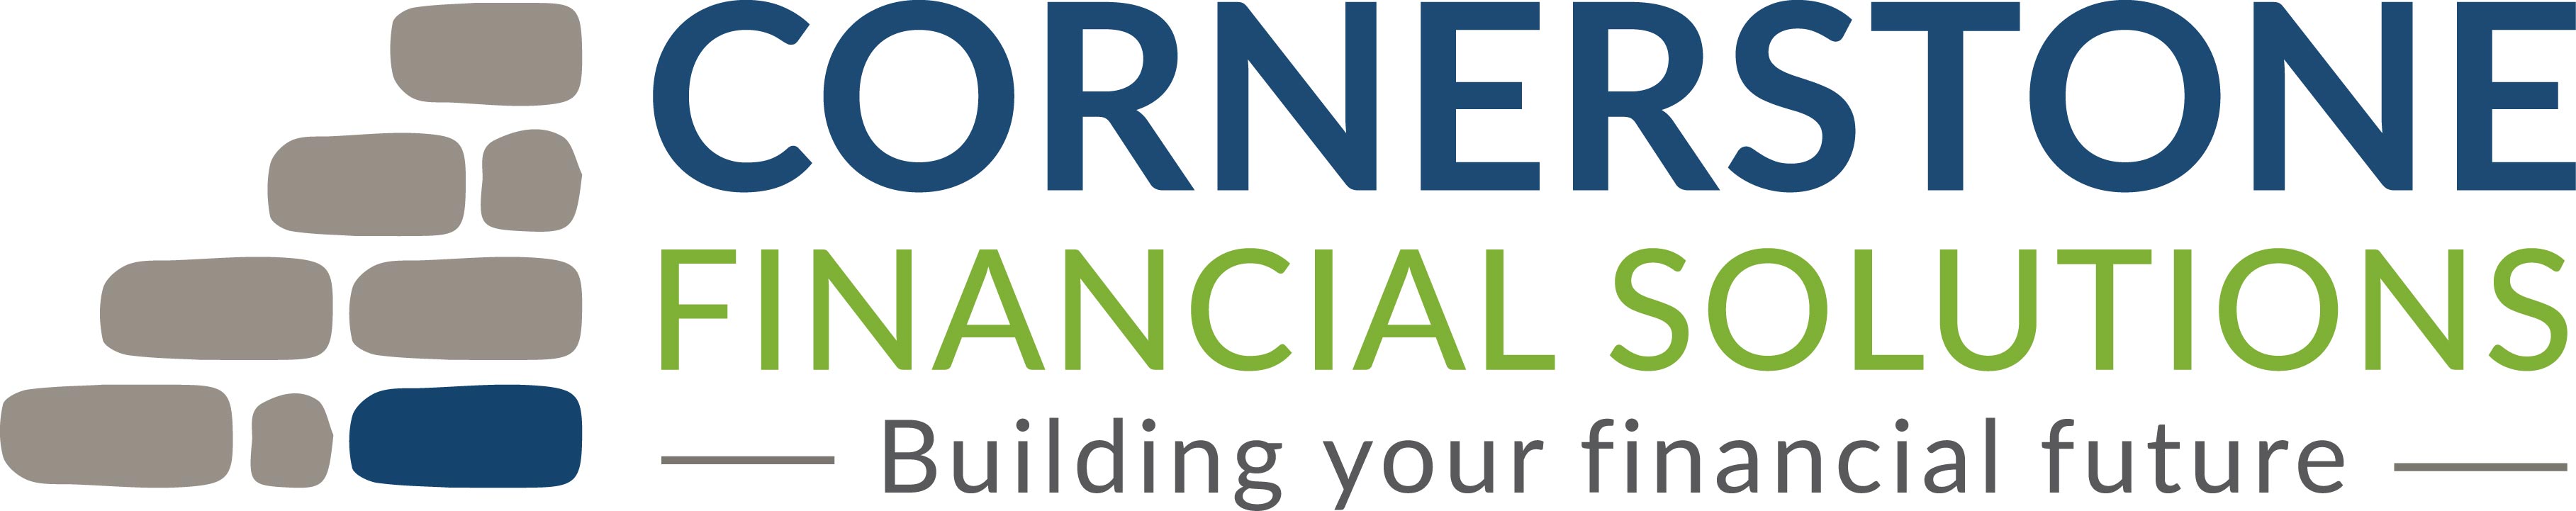 Cornerstone Financial Solutions